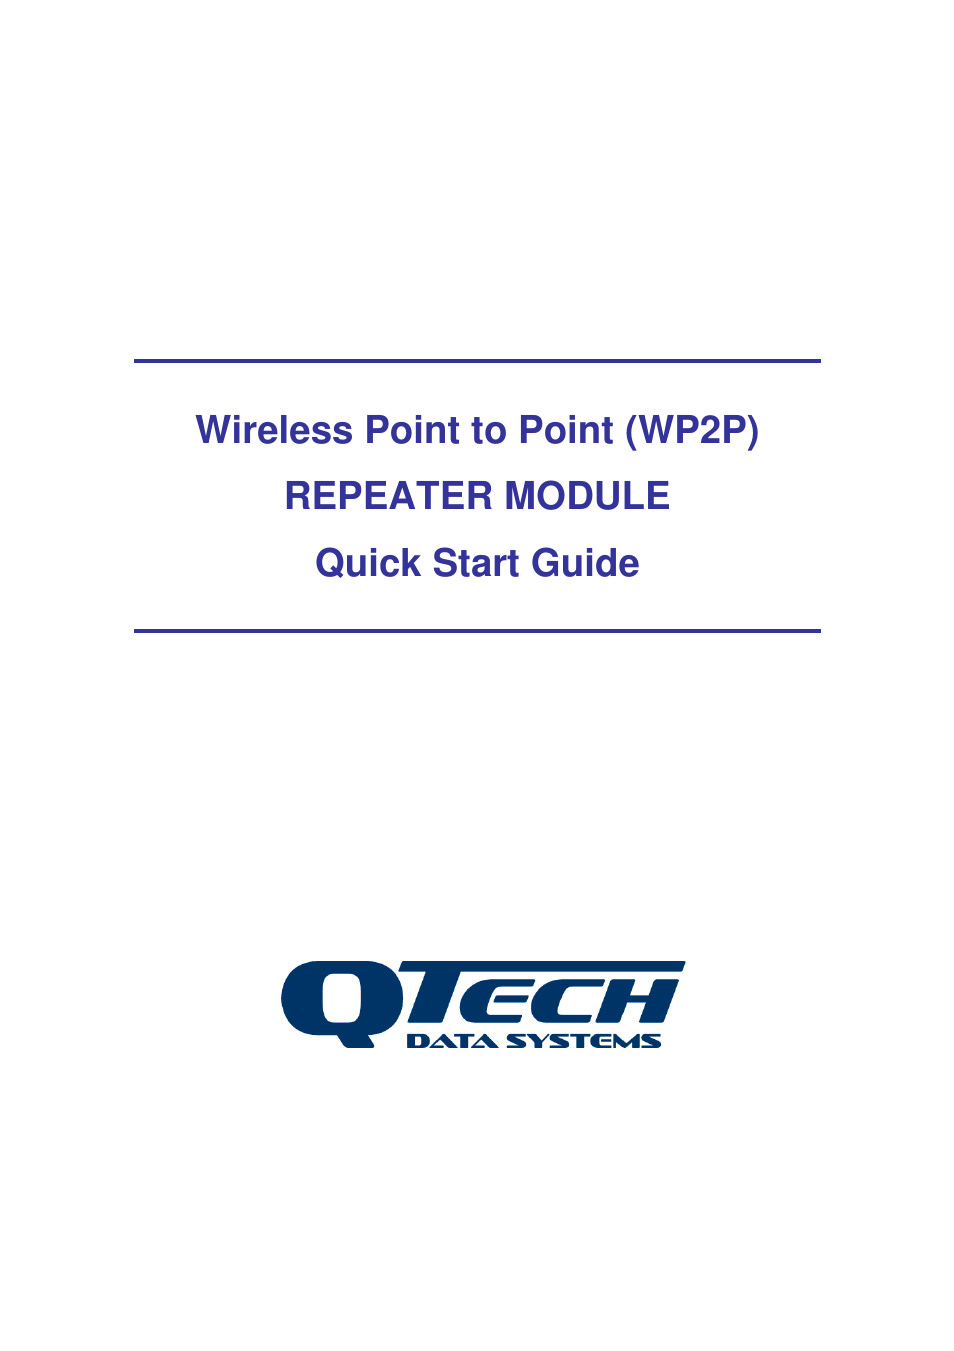 WP2P Repeater Module